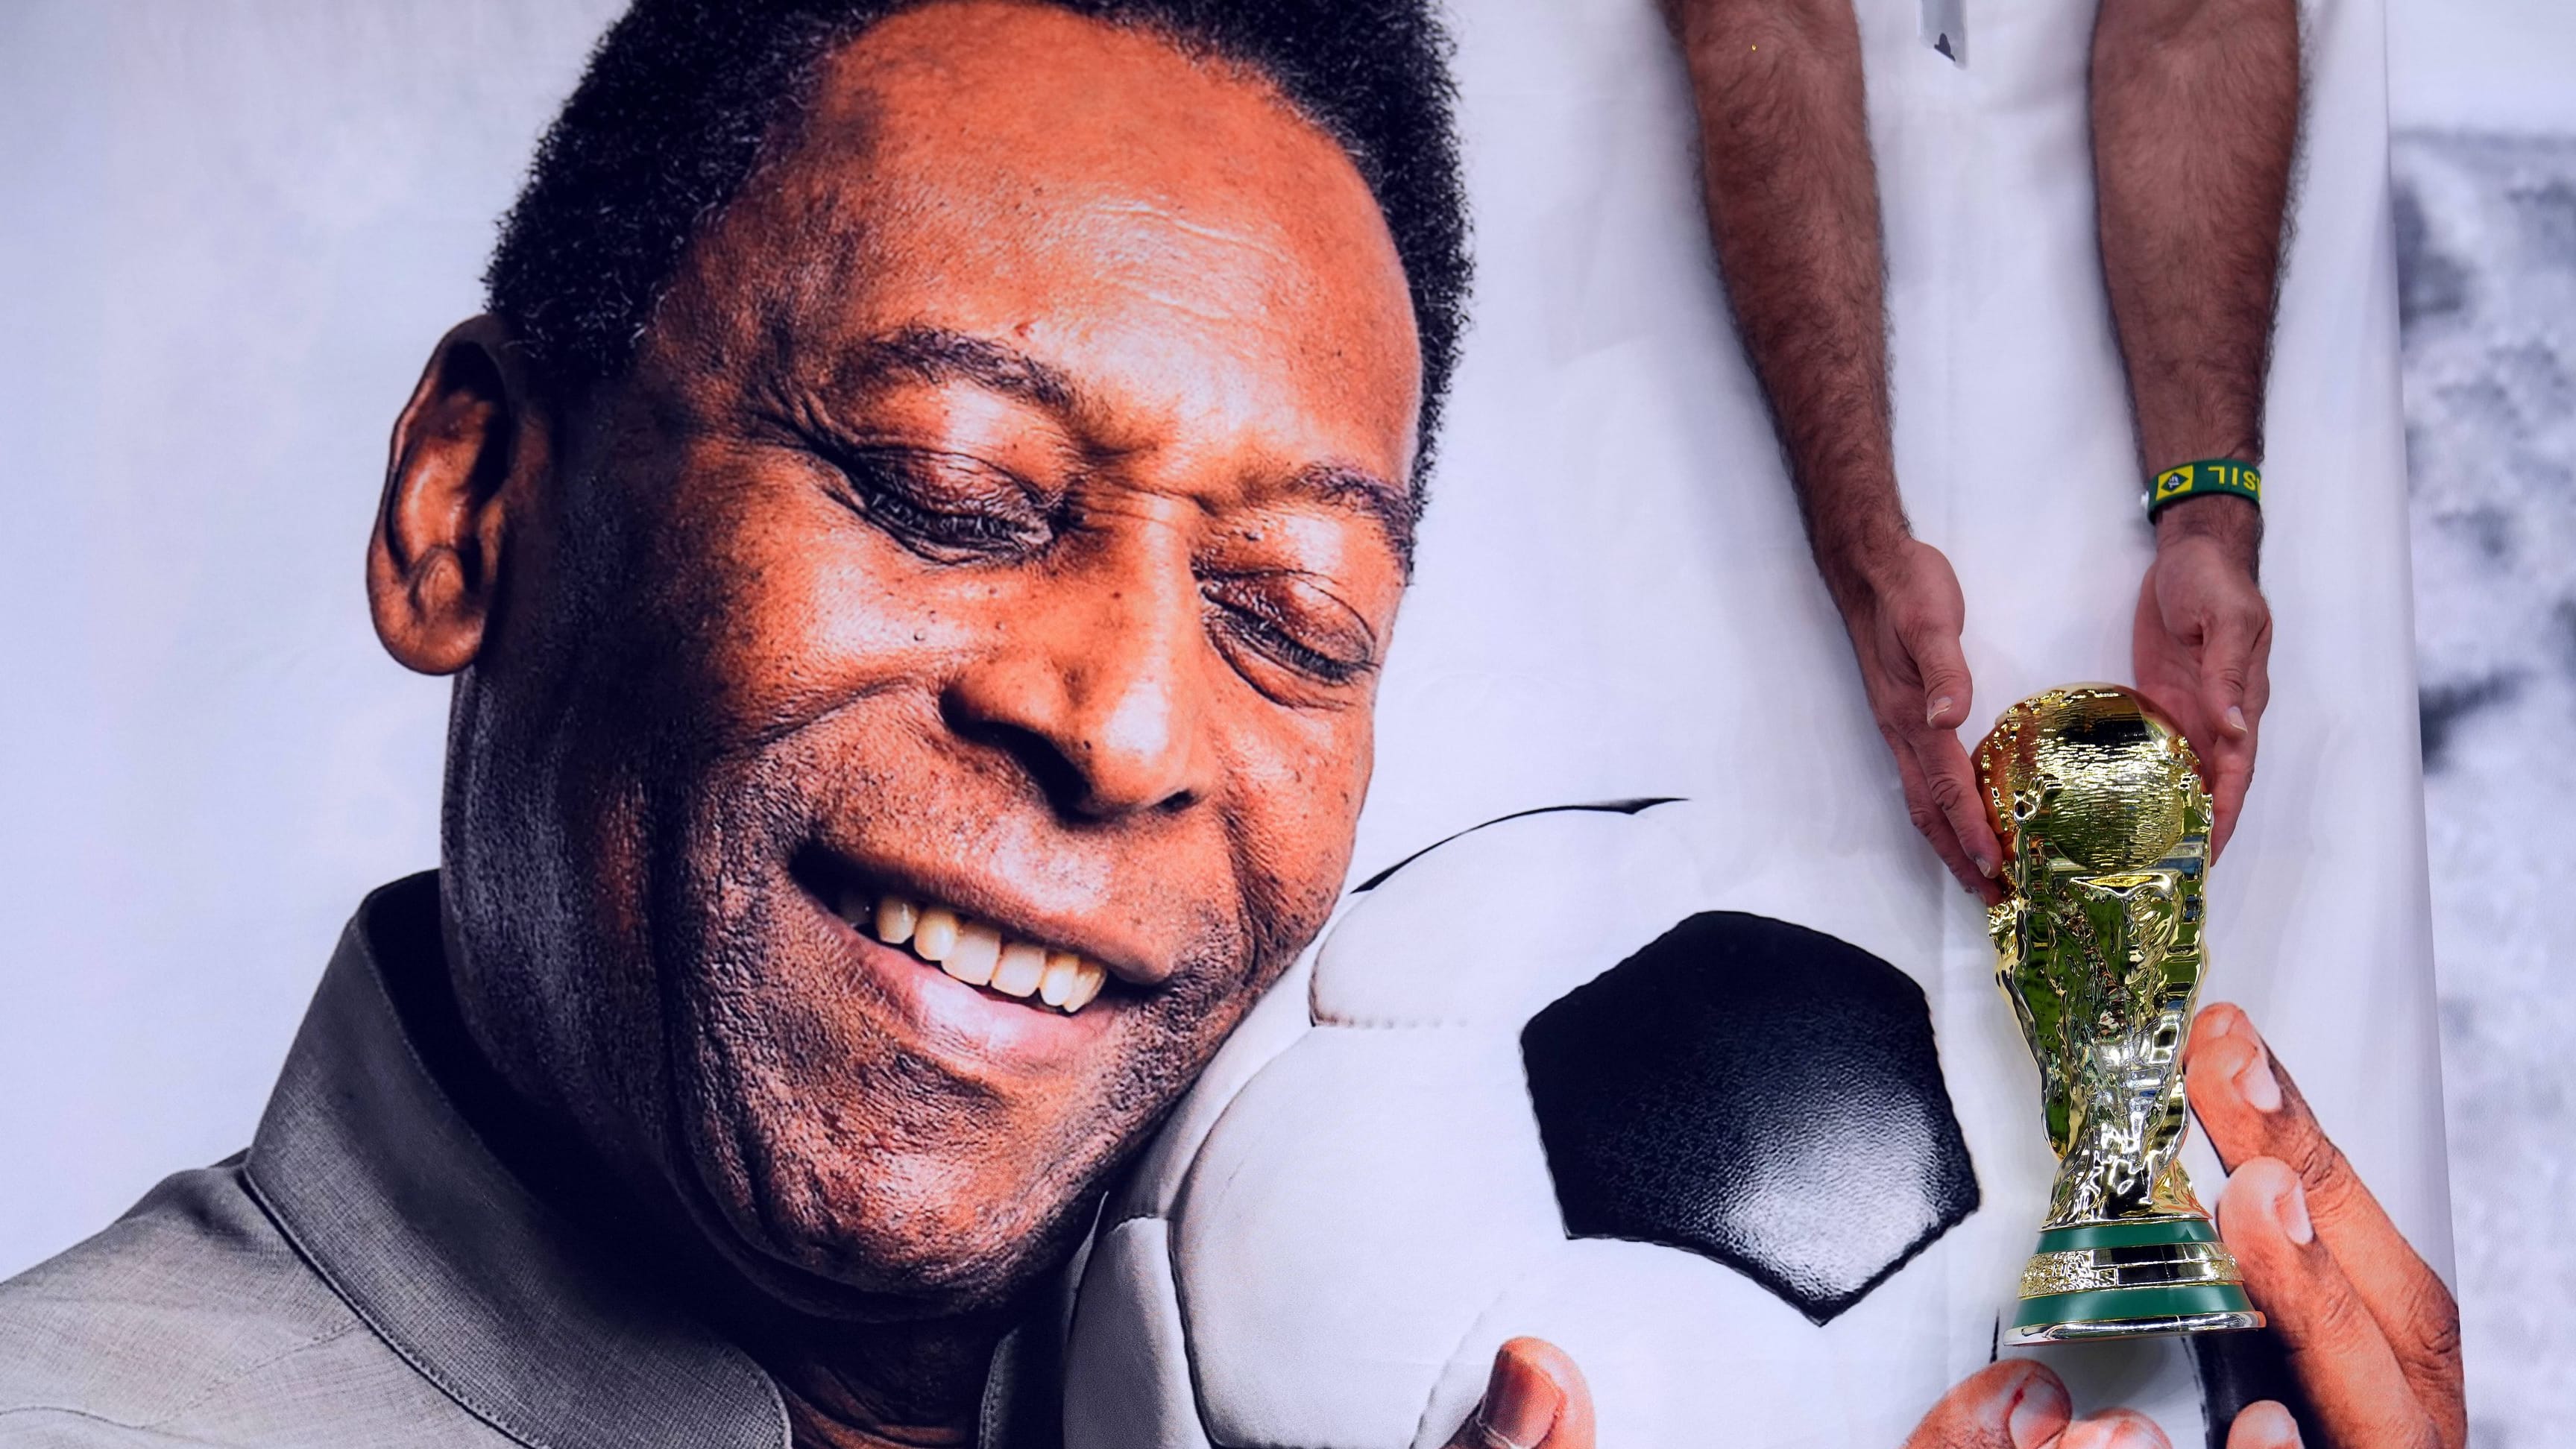 Tod von Pelé: Beckenbauer reagiert emotional